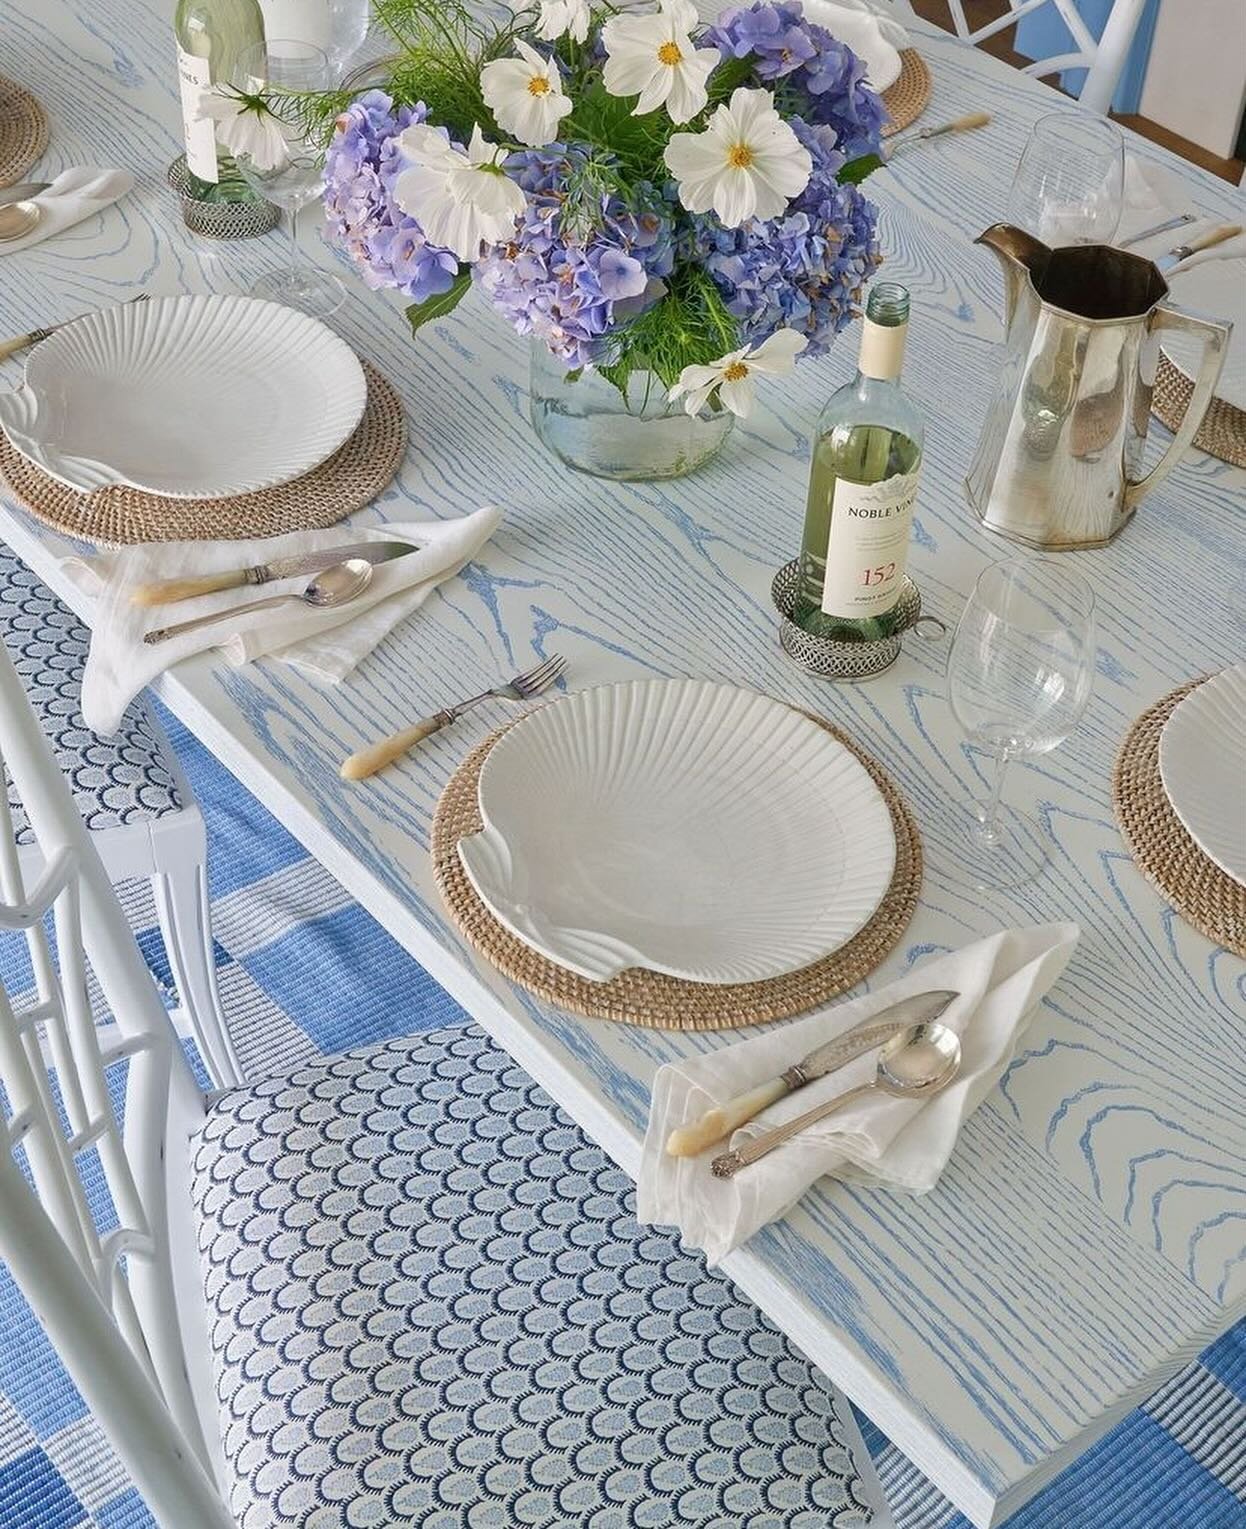 Summer mode: engaged 🌊☀️⛱️ Custom Dining table in Summer Blue Claize on solid Ash for @trellishomedesign 
.
Interior Design: Trellis Home Design
📸: @janebeilesphoto
Builder: @ejjaxtimerbuilderinc
Architect: @patrickahearnarchitect
Styling: @karinli